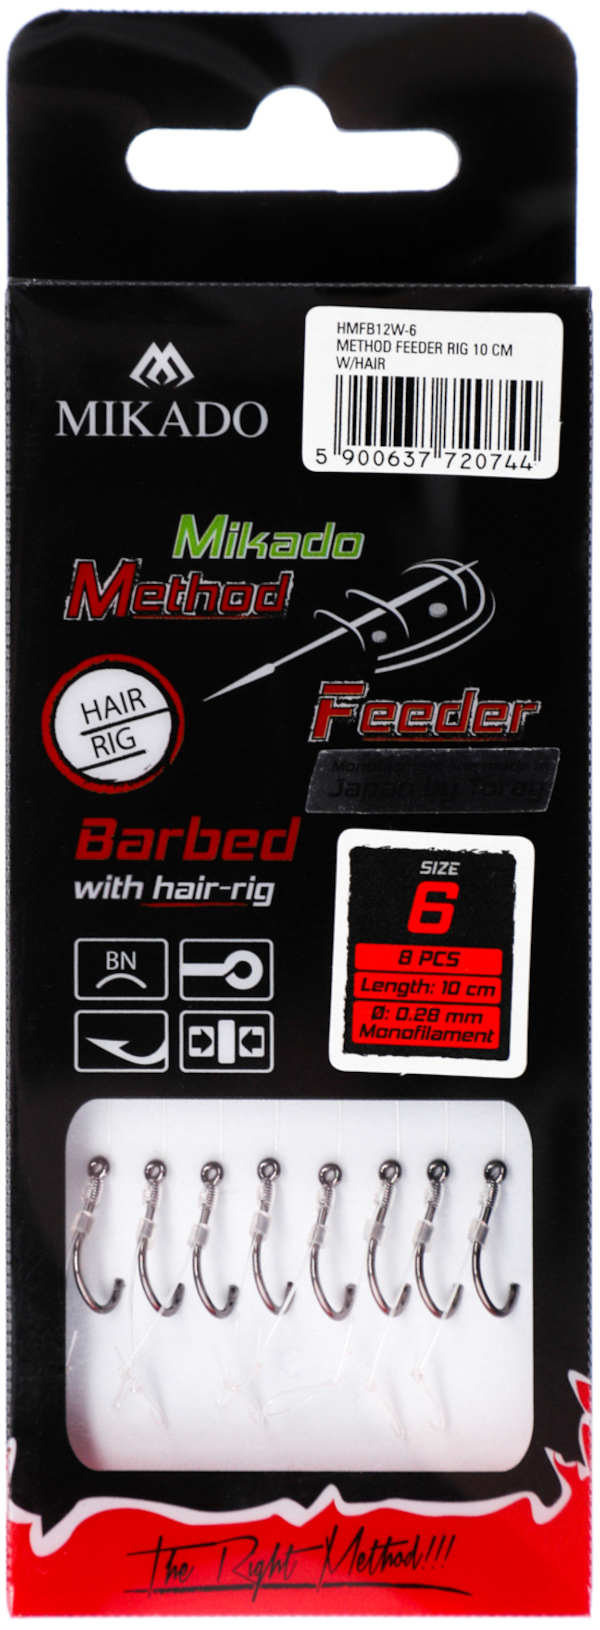 Mikado Method Feeder Rig With Hair